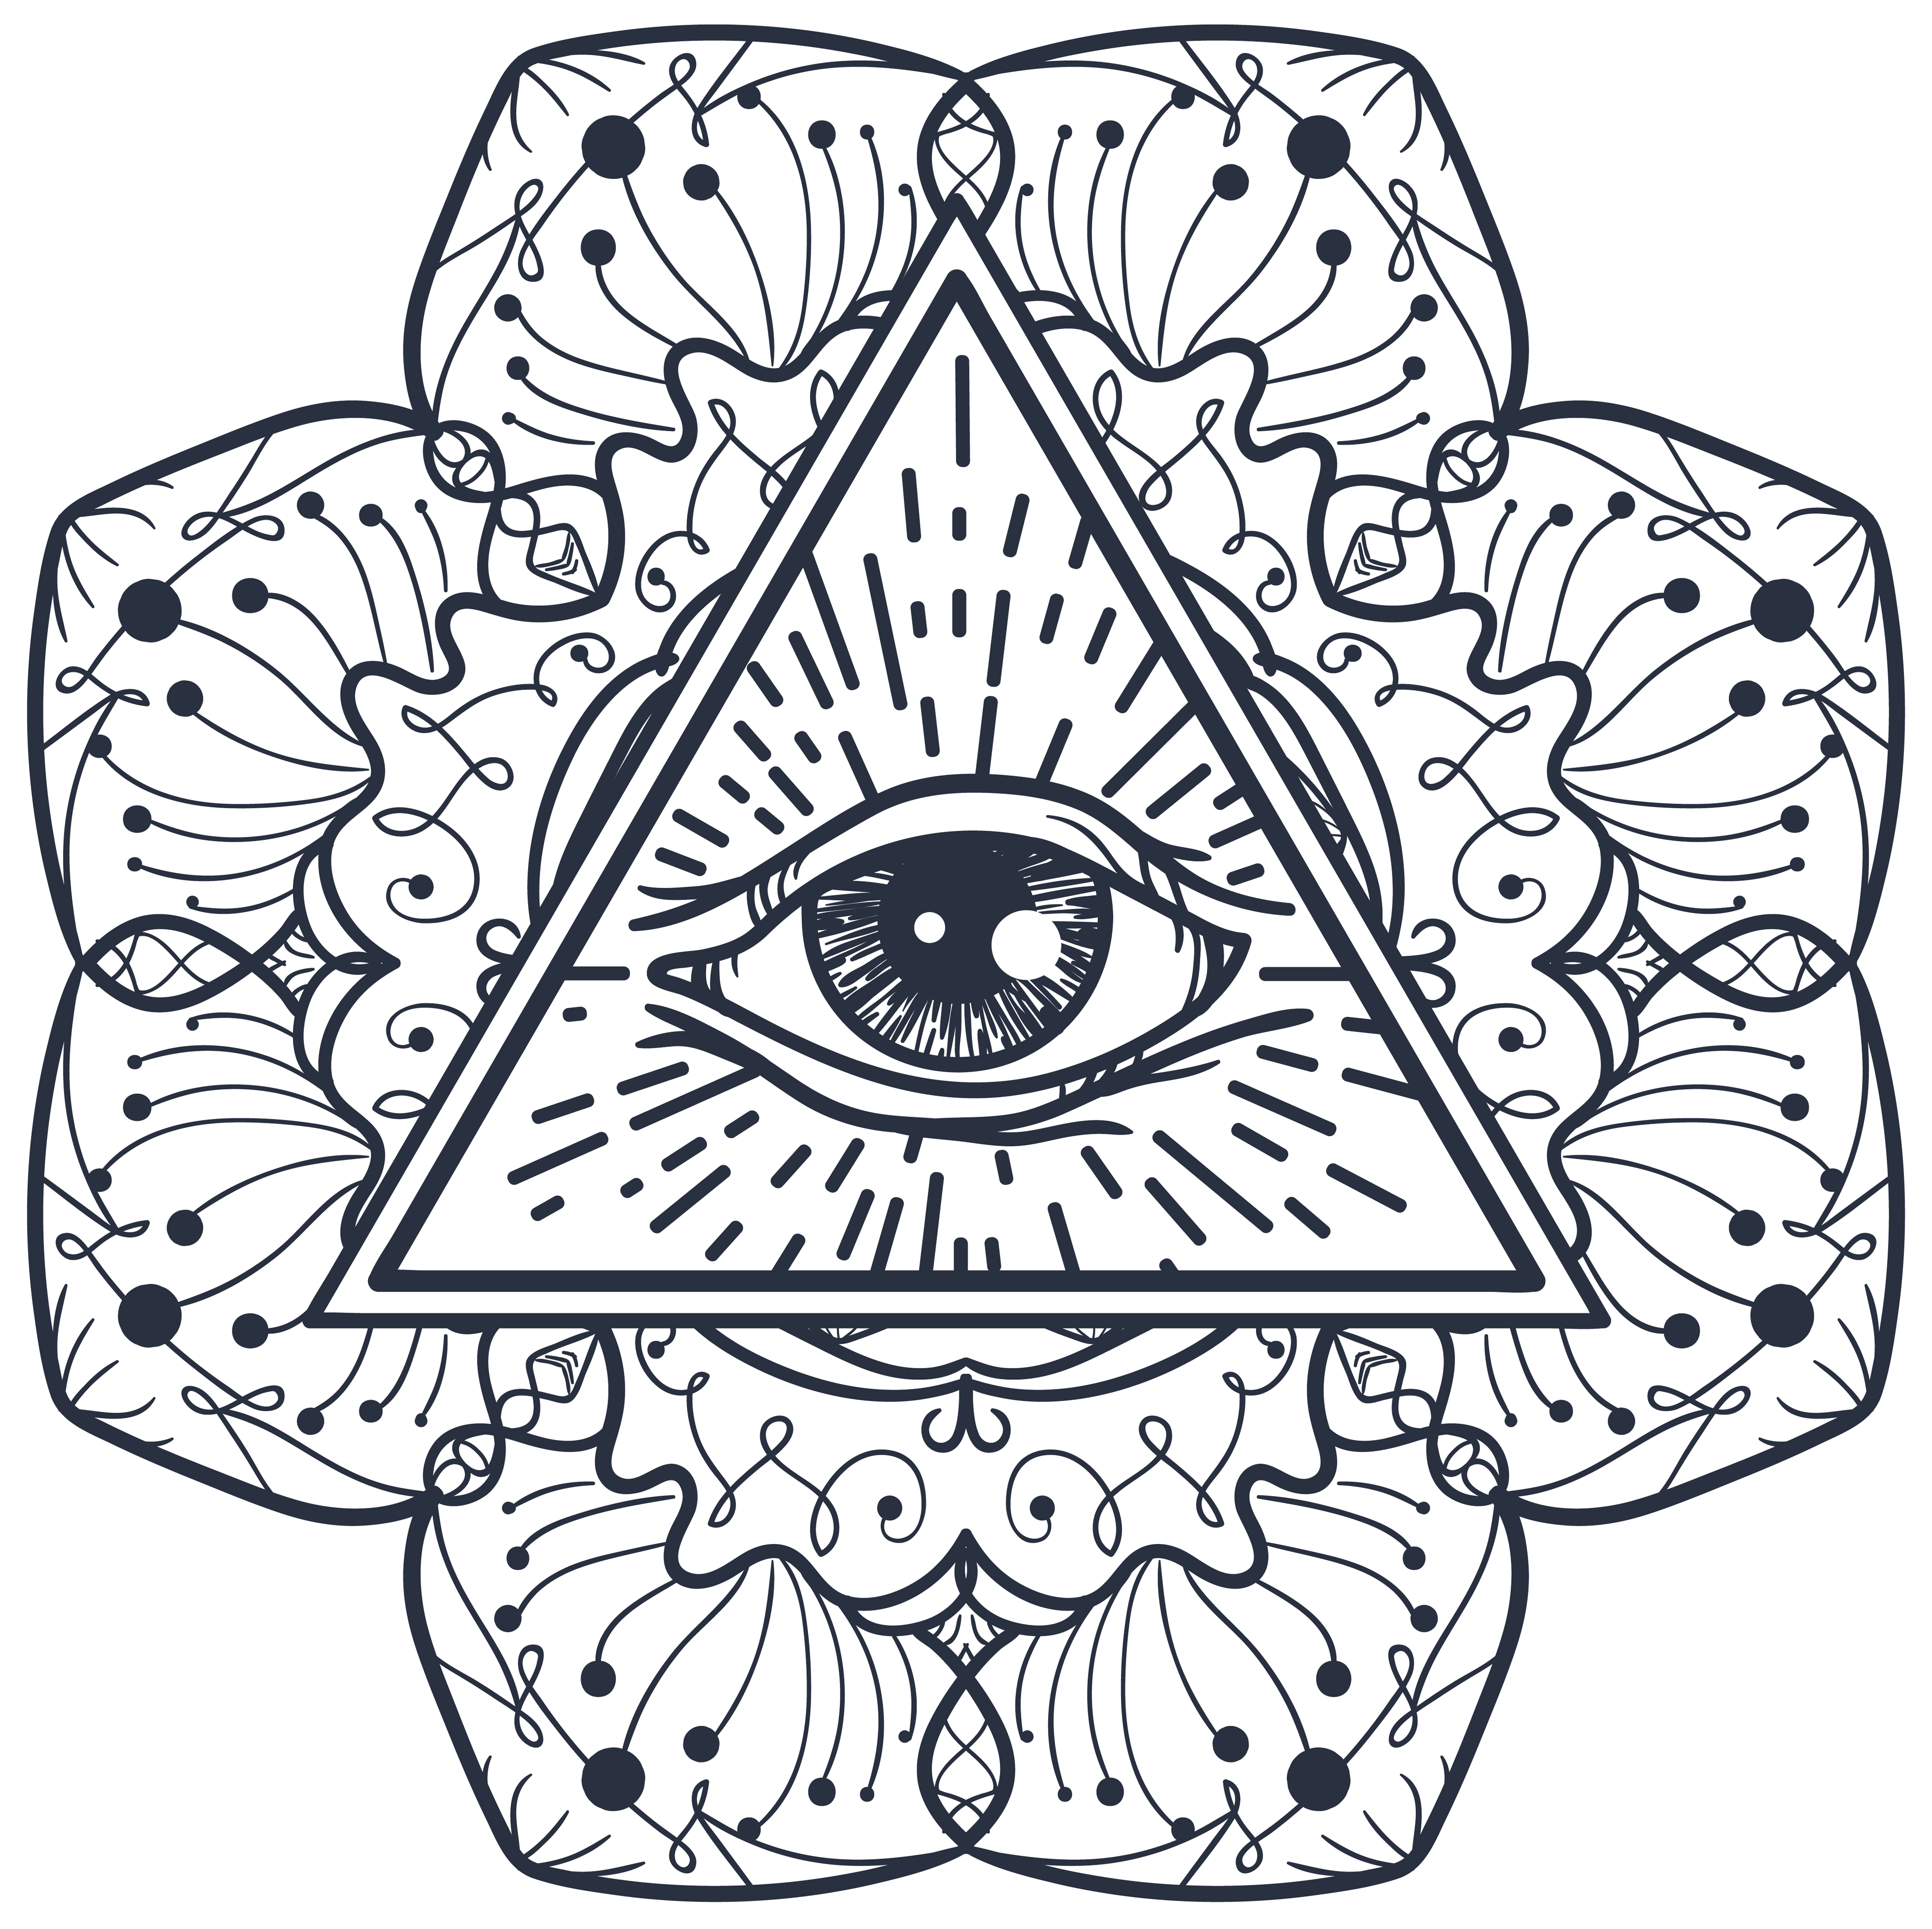 Free Vector | All seeing eye pyramid symbol in the engraving tattoo style.  freemason and spiritual, illuminati and religion, triangle magic,